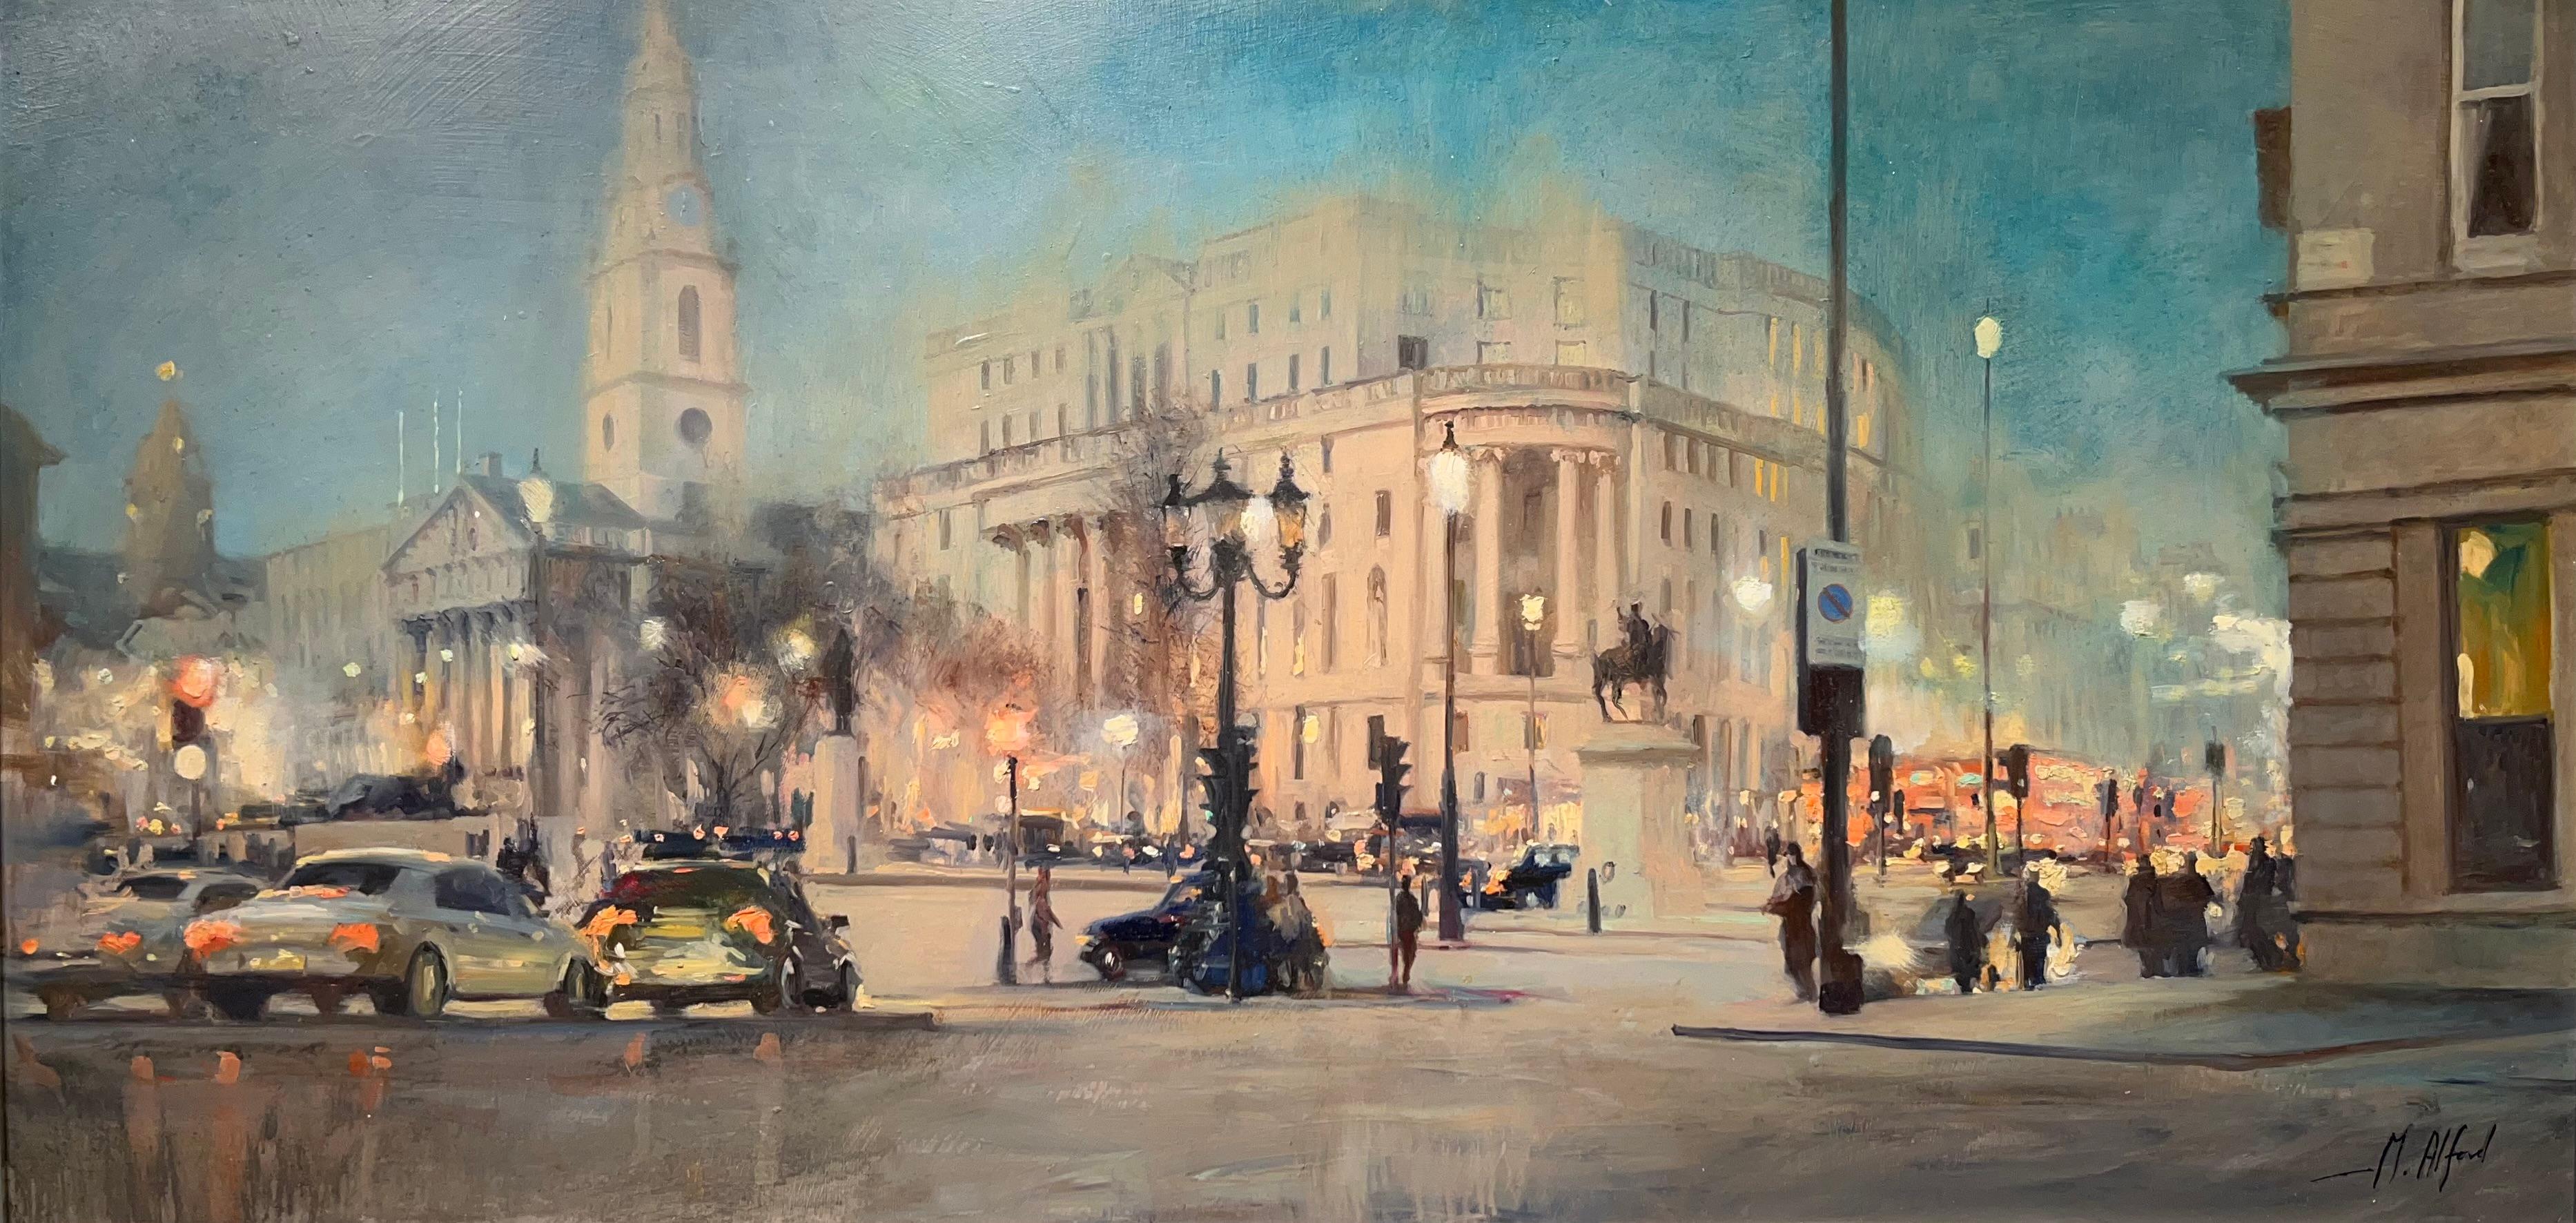 Spring Gardens Trafalgar Square-original impressionism cityscape painting-art